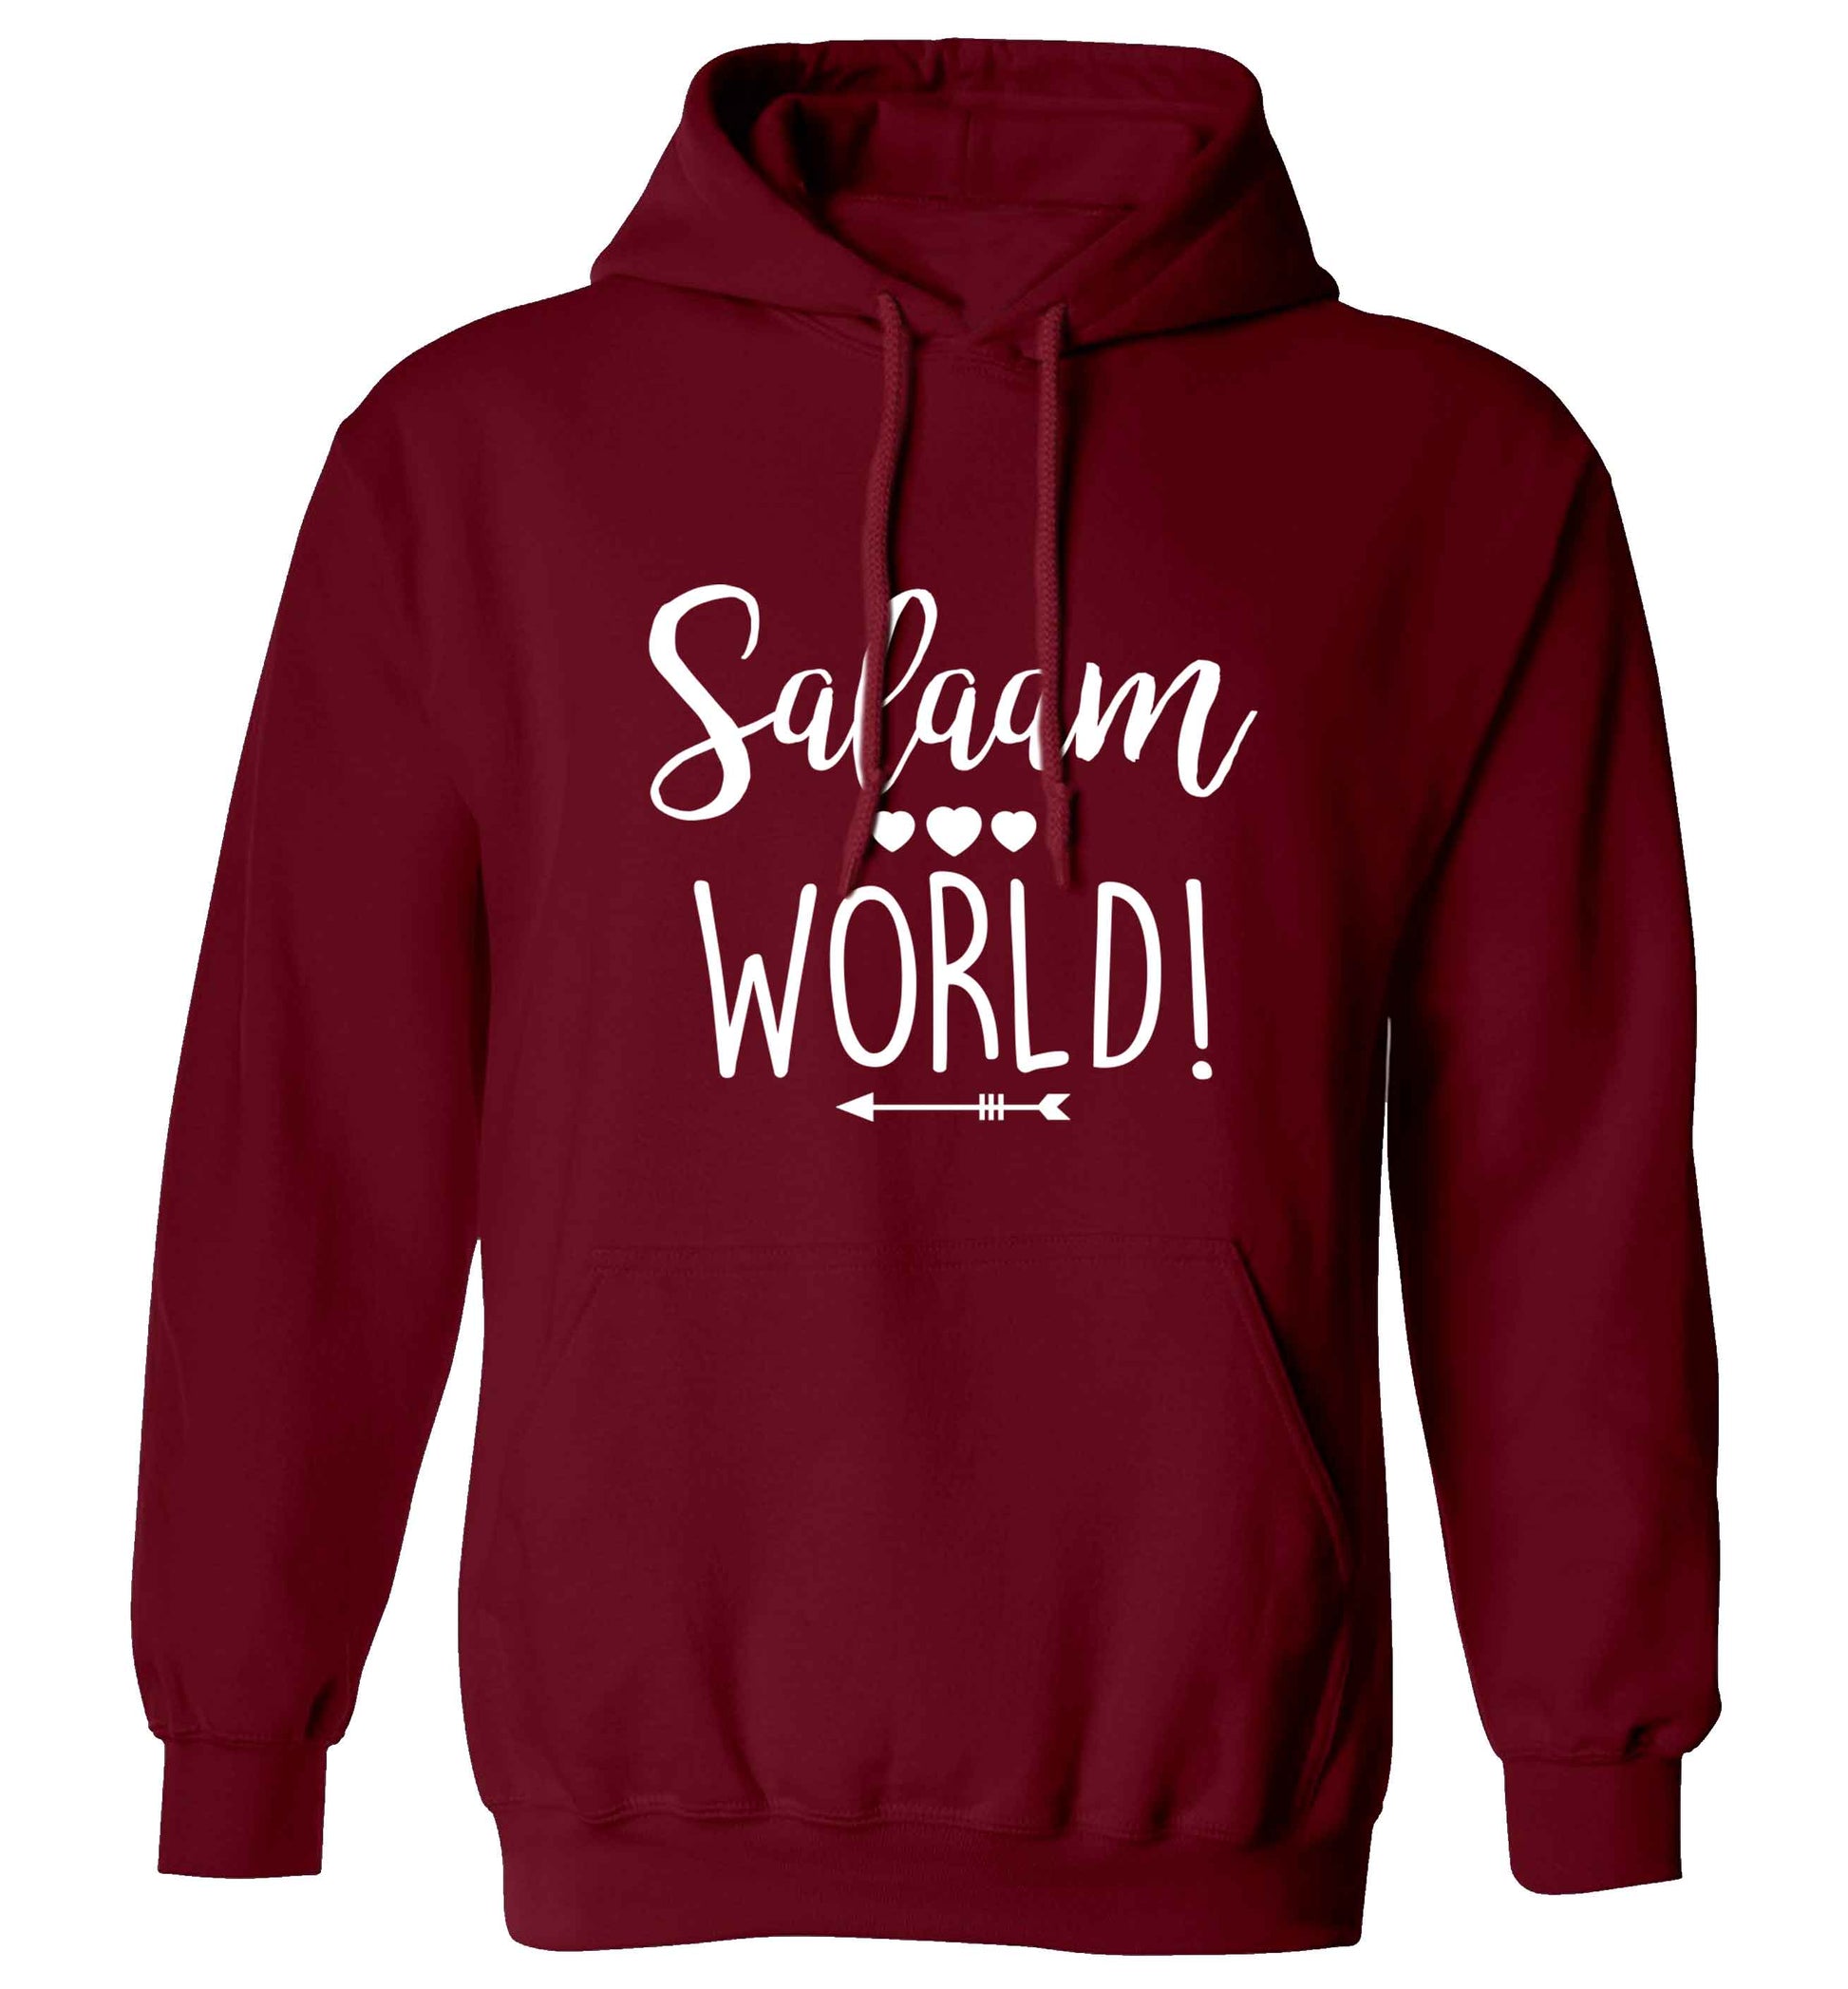 Salaam world adults unisex maroon hoodie 2XL